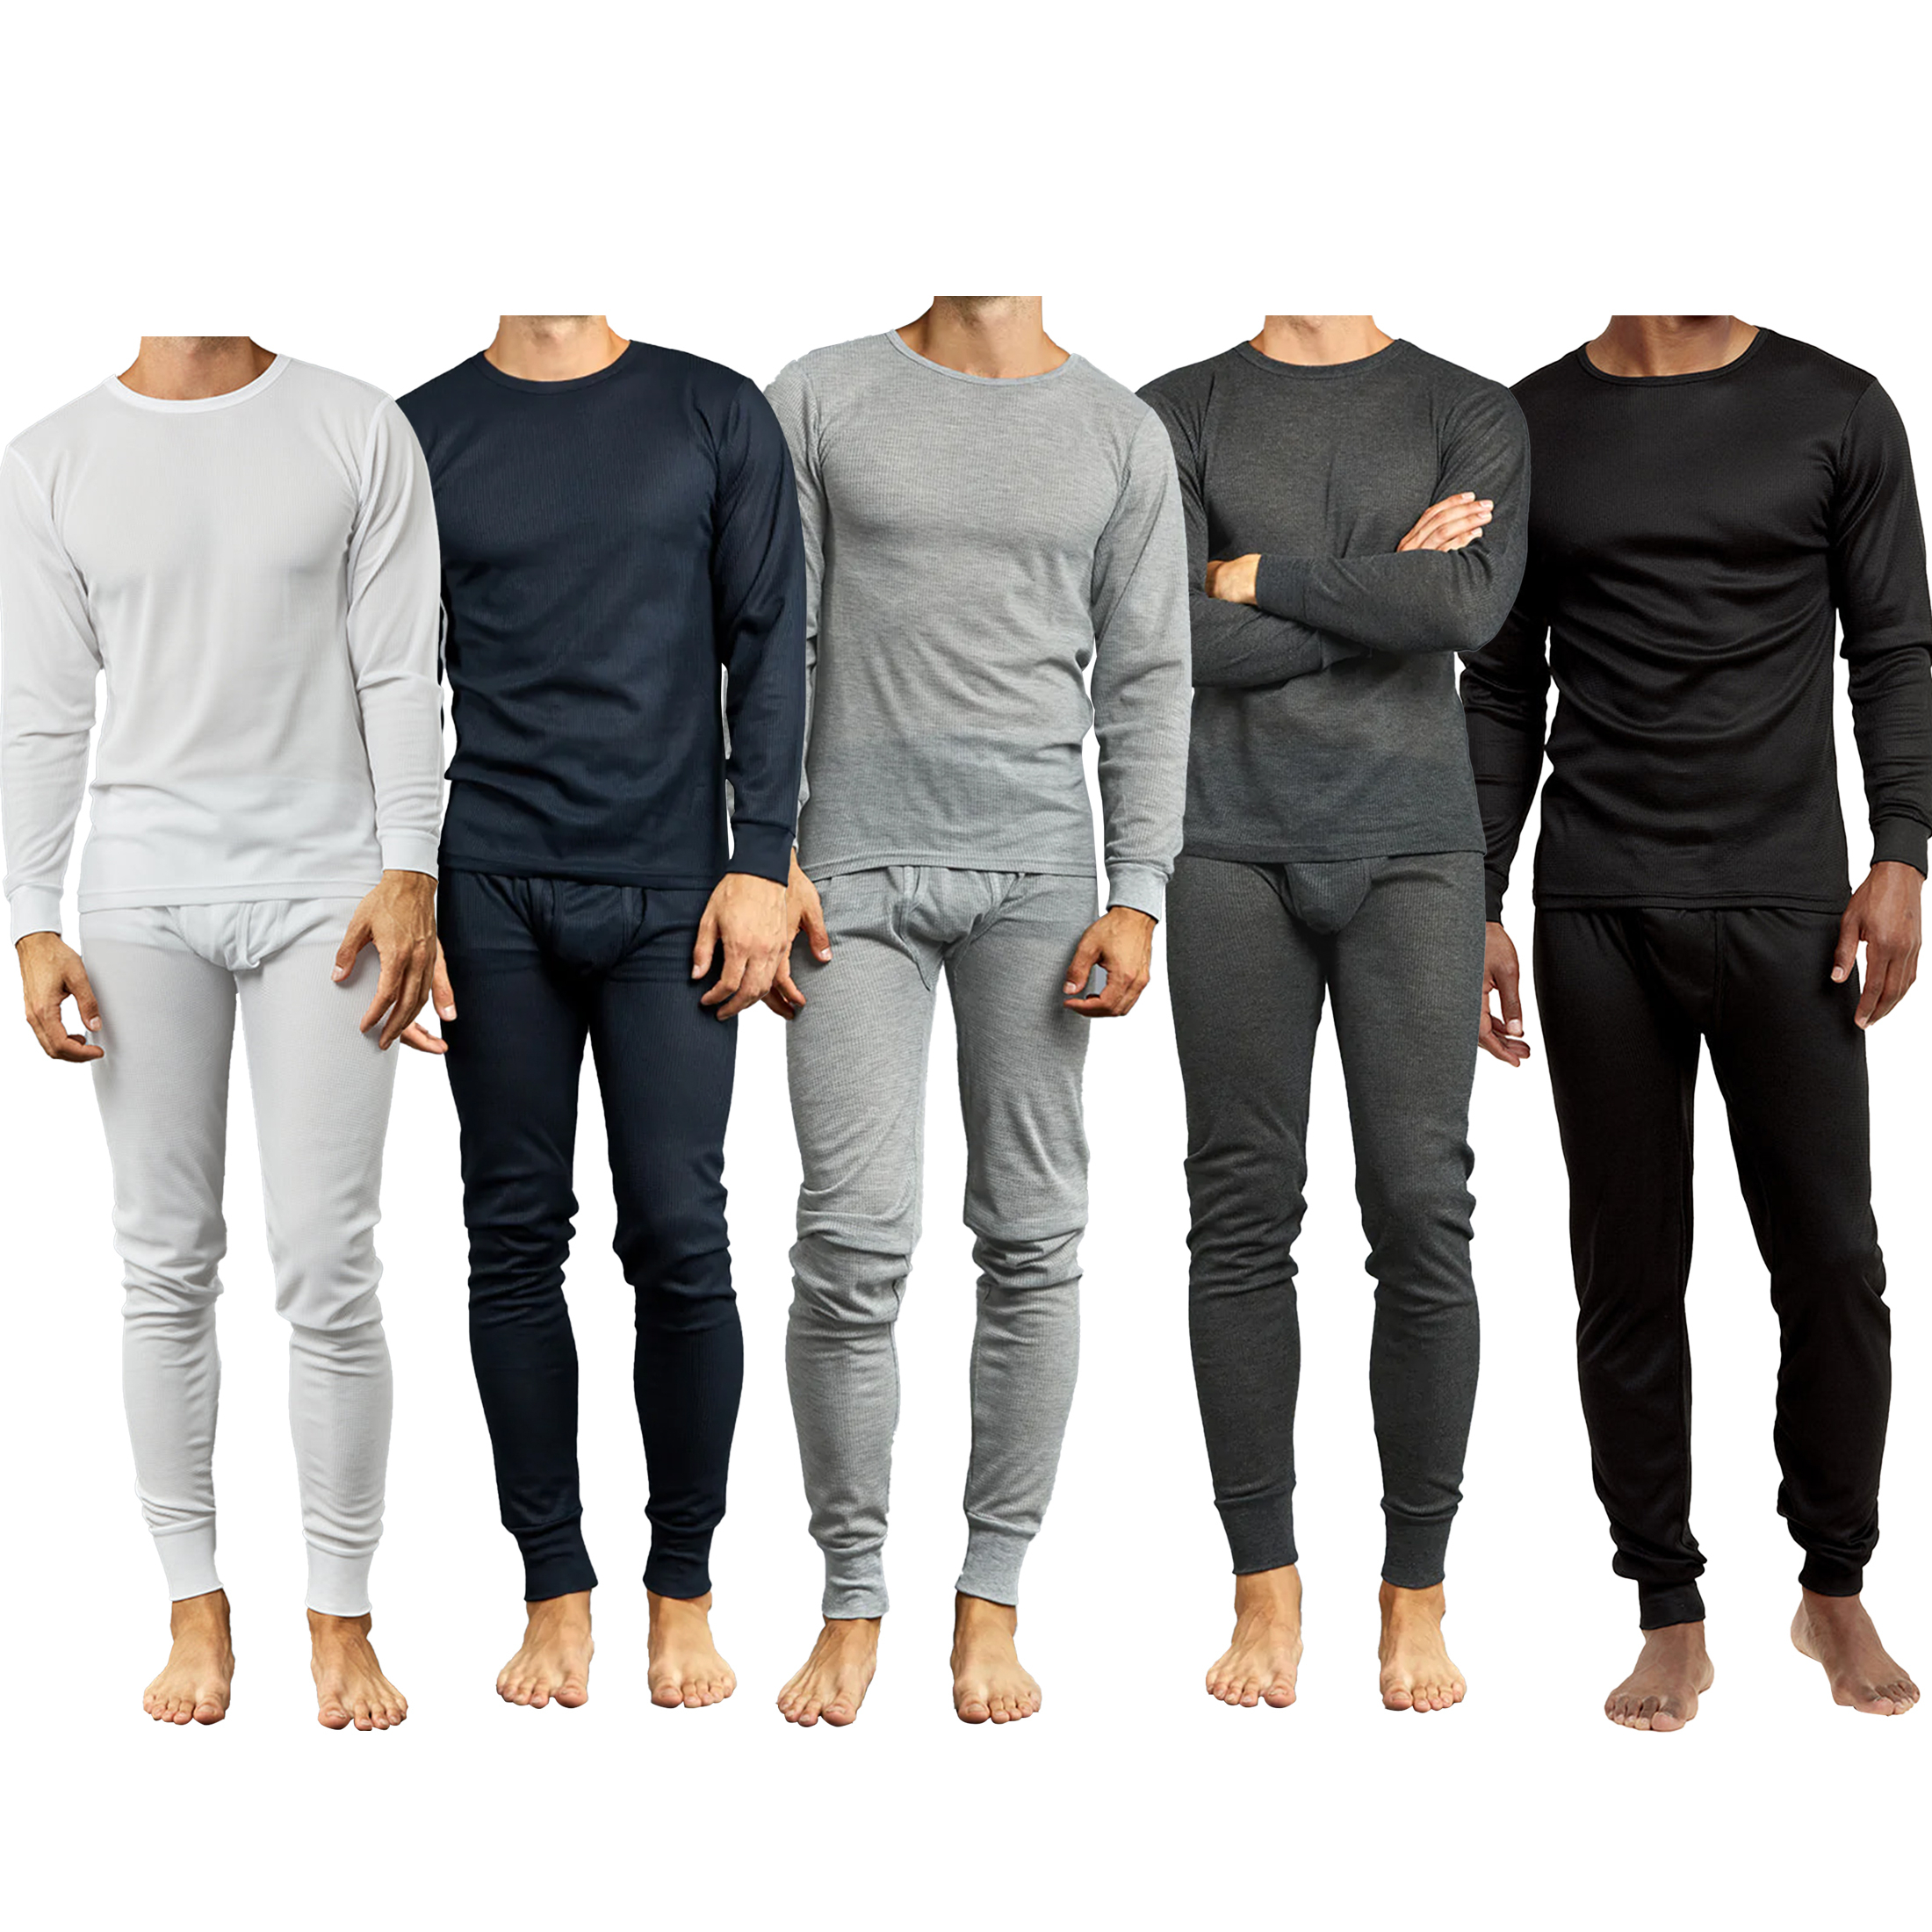 2-Piece: Men's Moisture Wicking Long Johns Base Layer Thermal Underwear Set (Top & Bottom) - Black, Medium